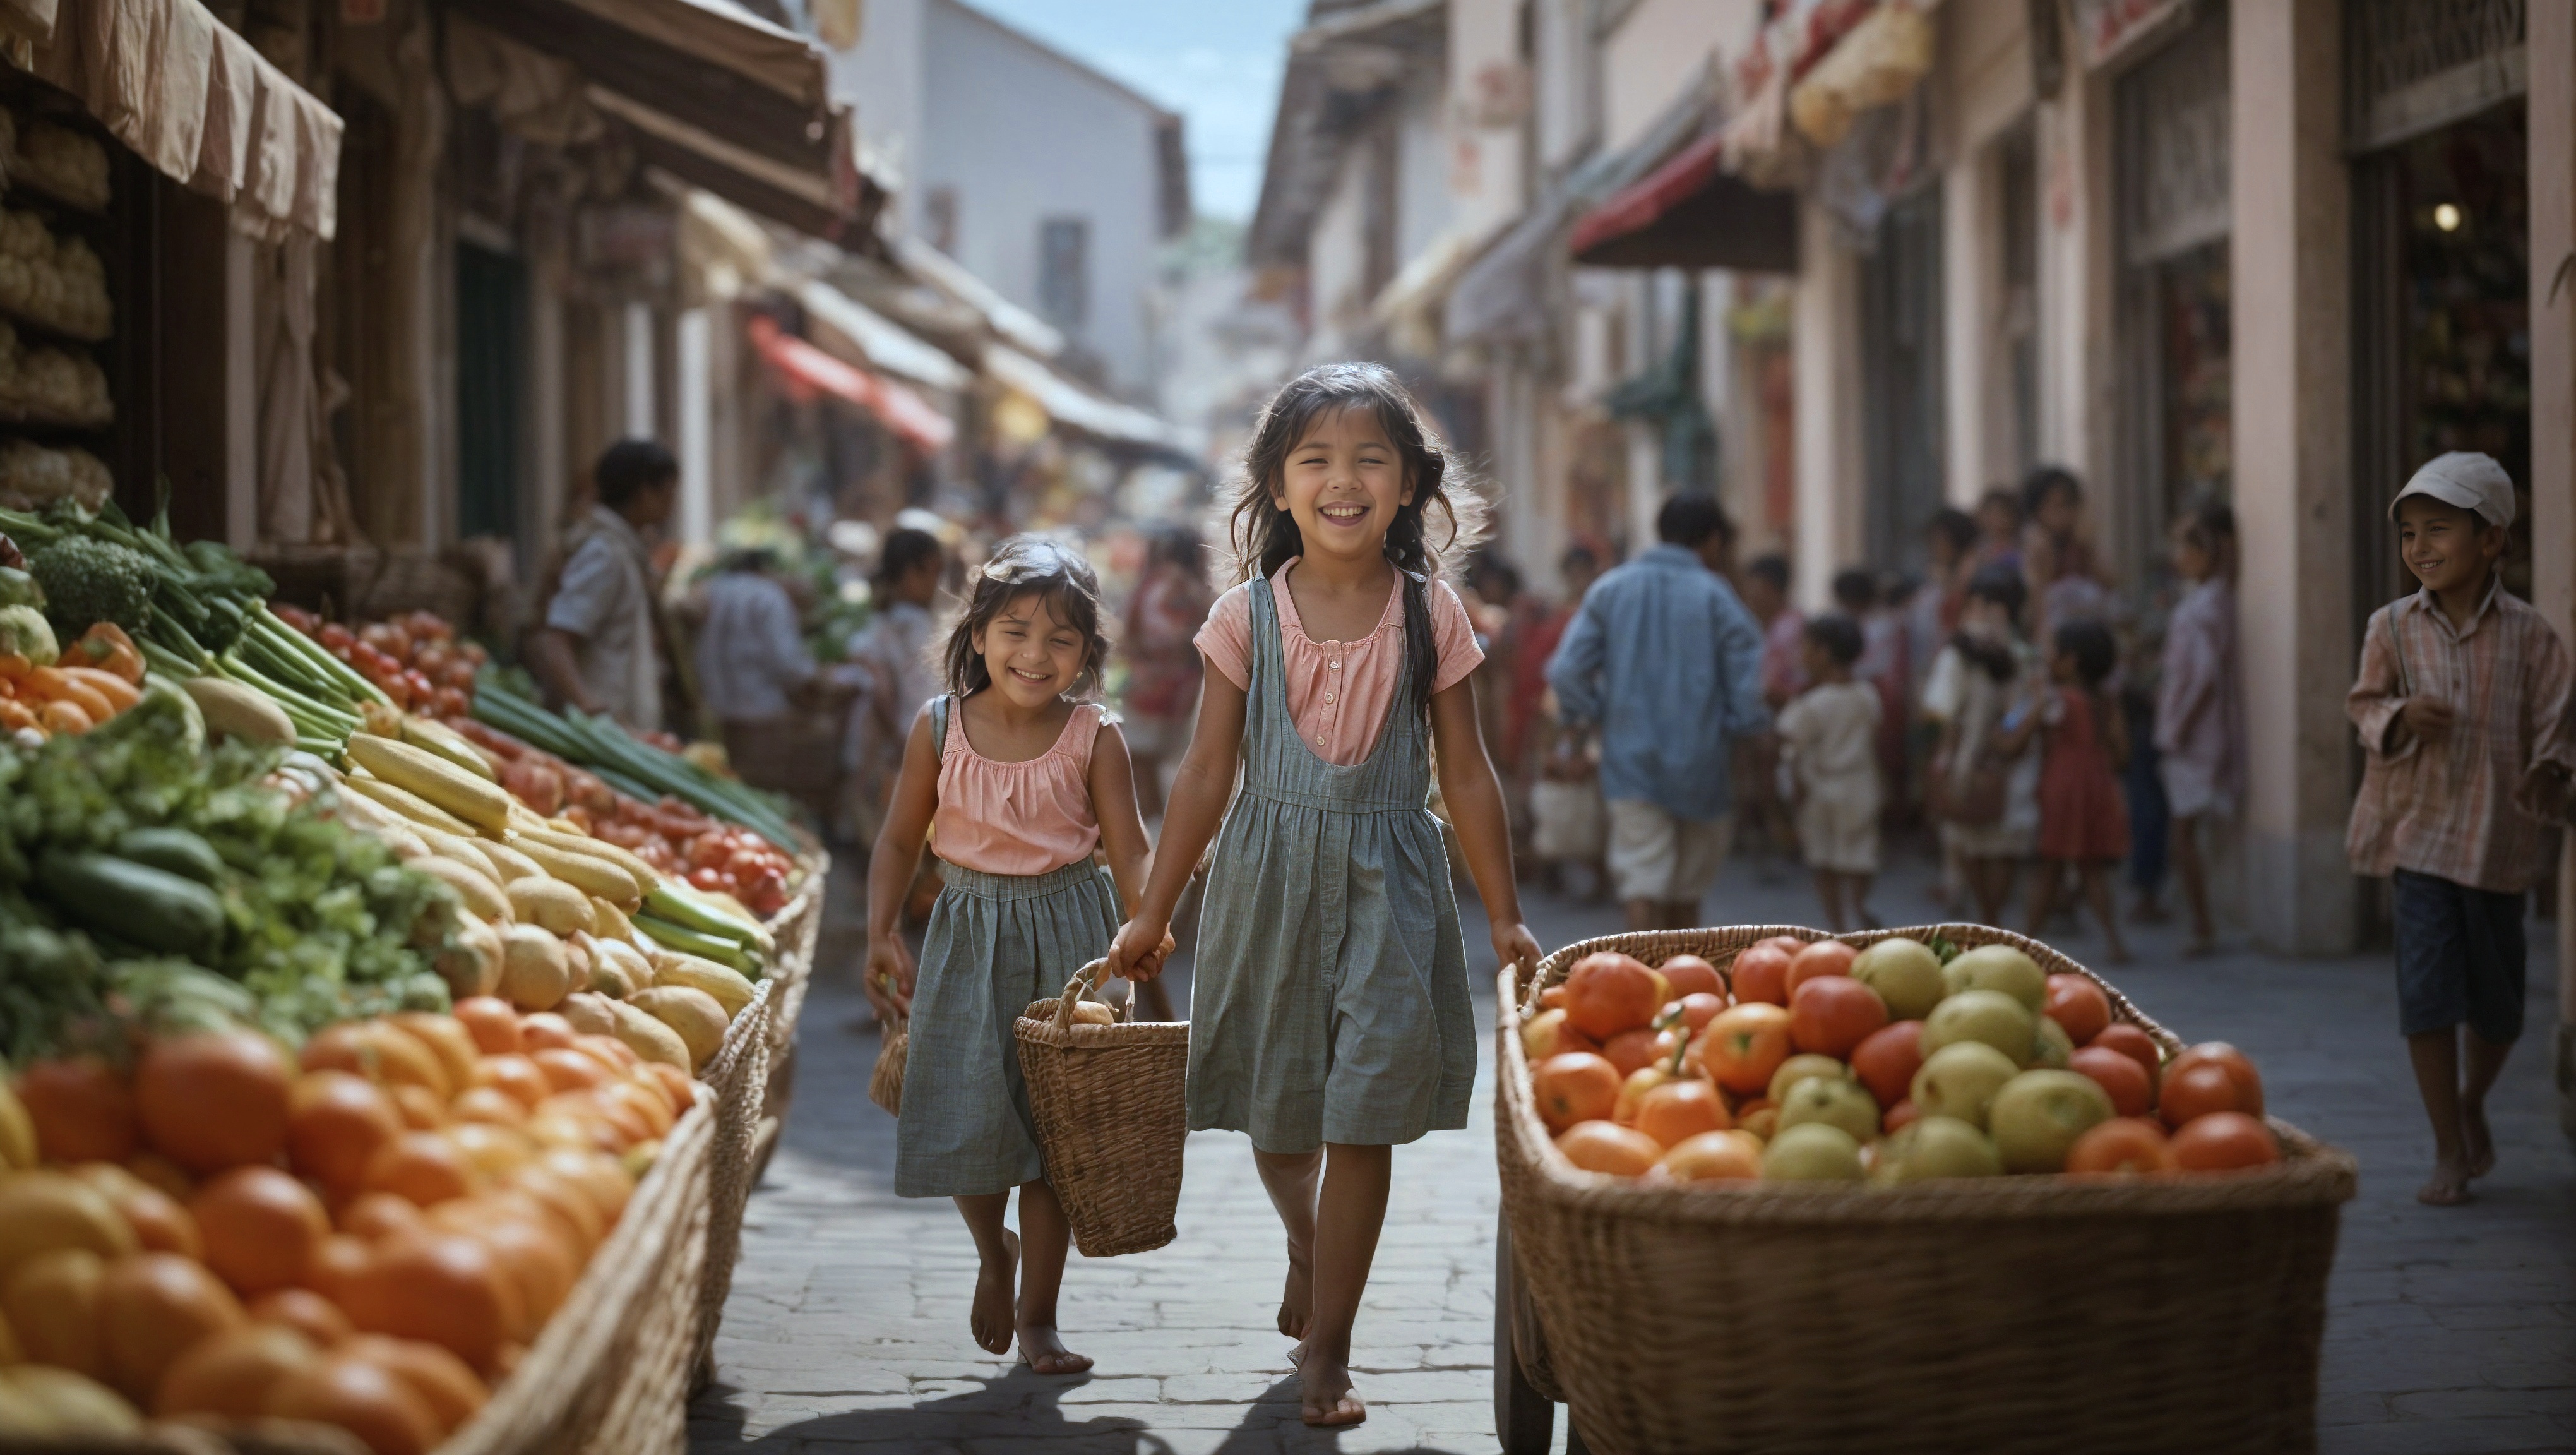 Free photo Two girls walk through an urban market holding baskets